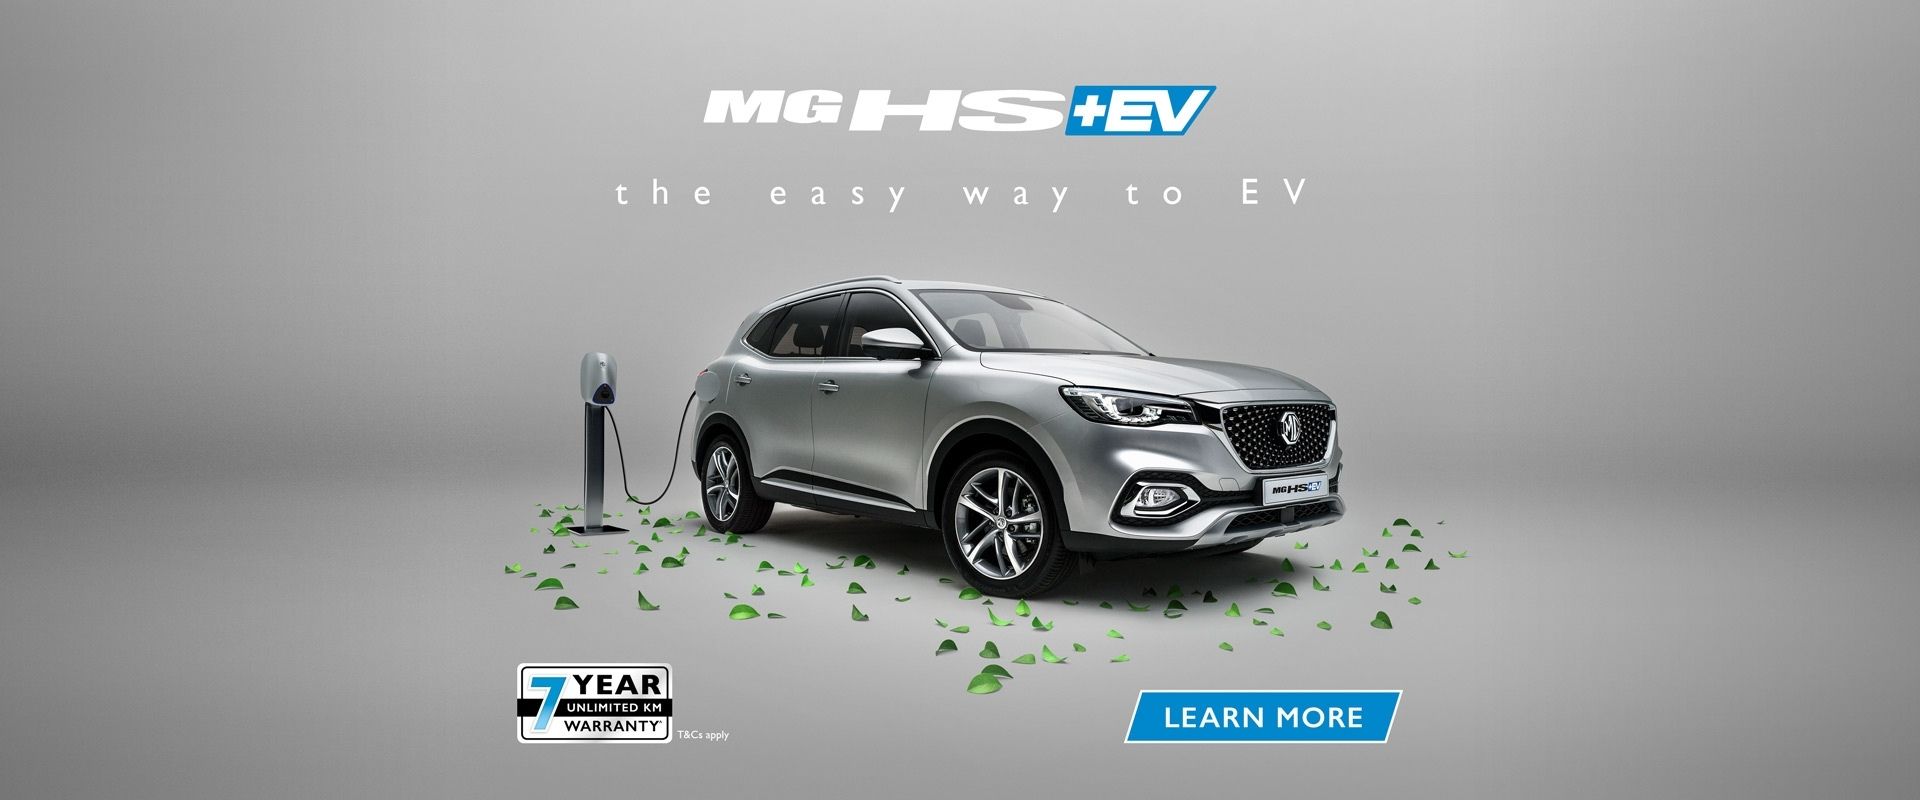 MG HS Plus EV. Learn more.